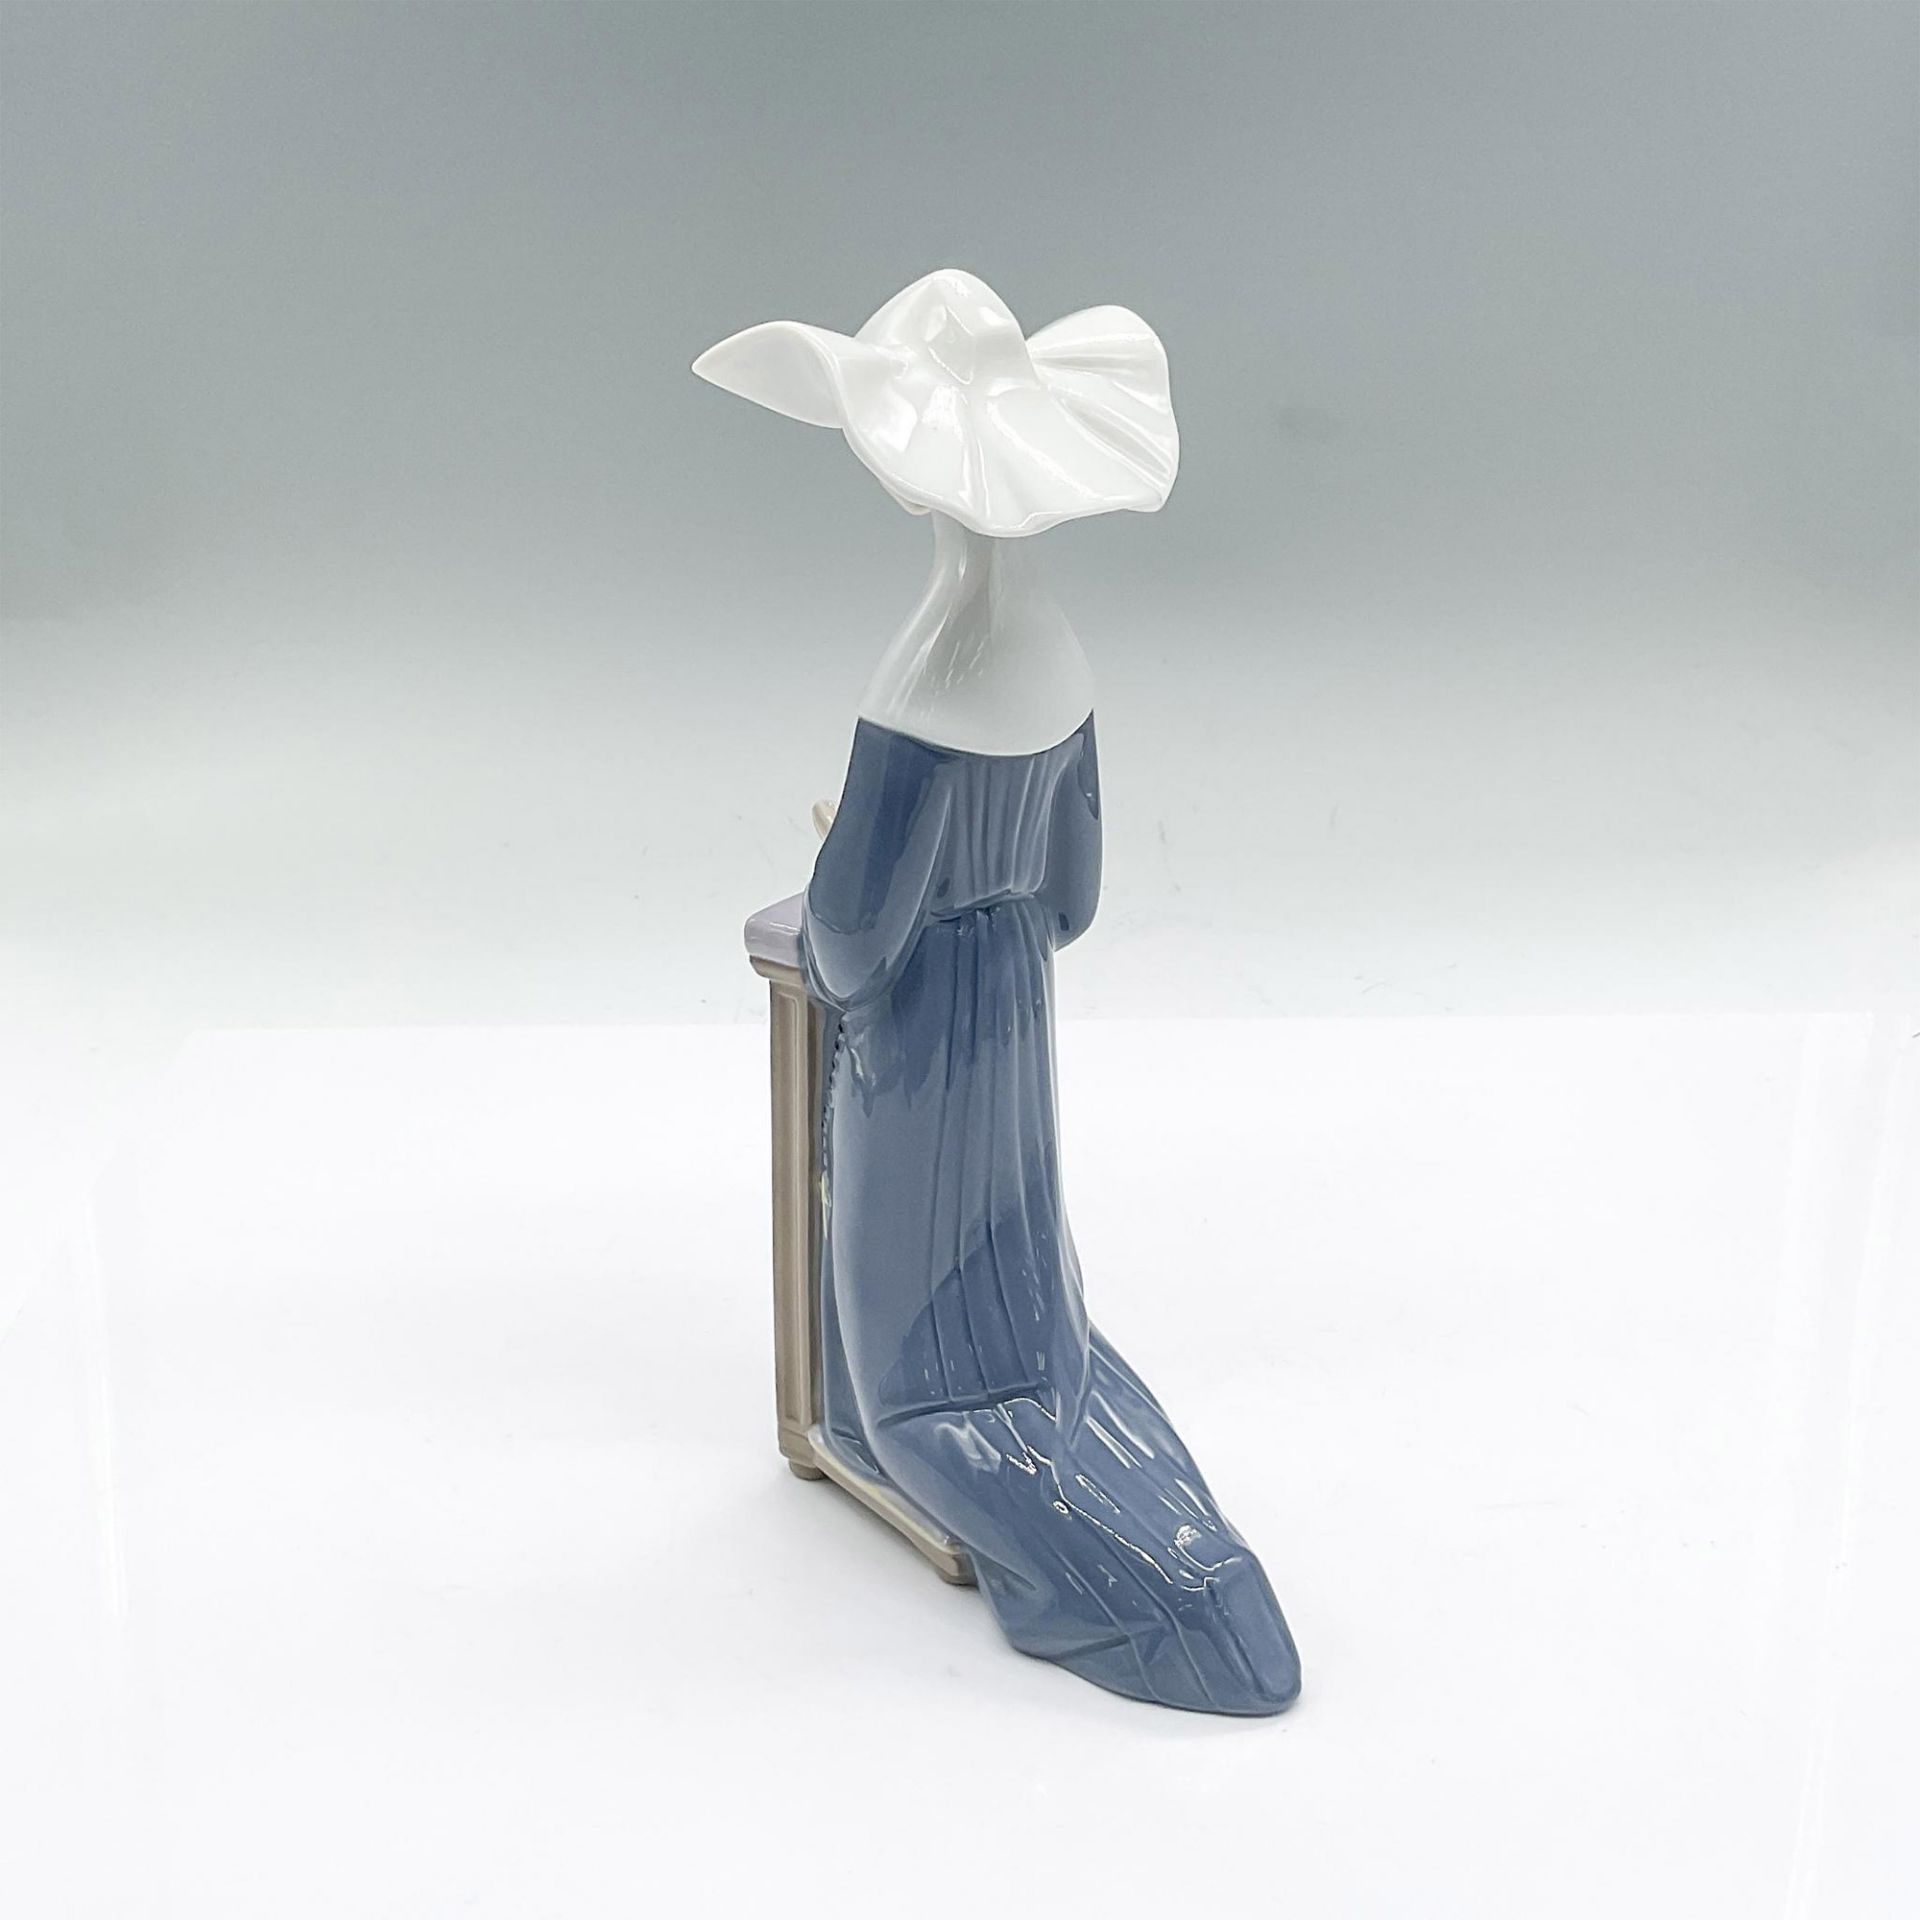 Lladro Porcelain Figurine, Meditation - Image 2 of 3